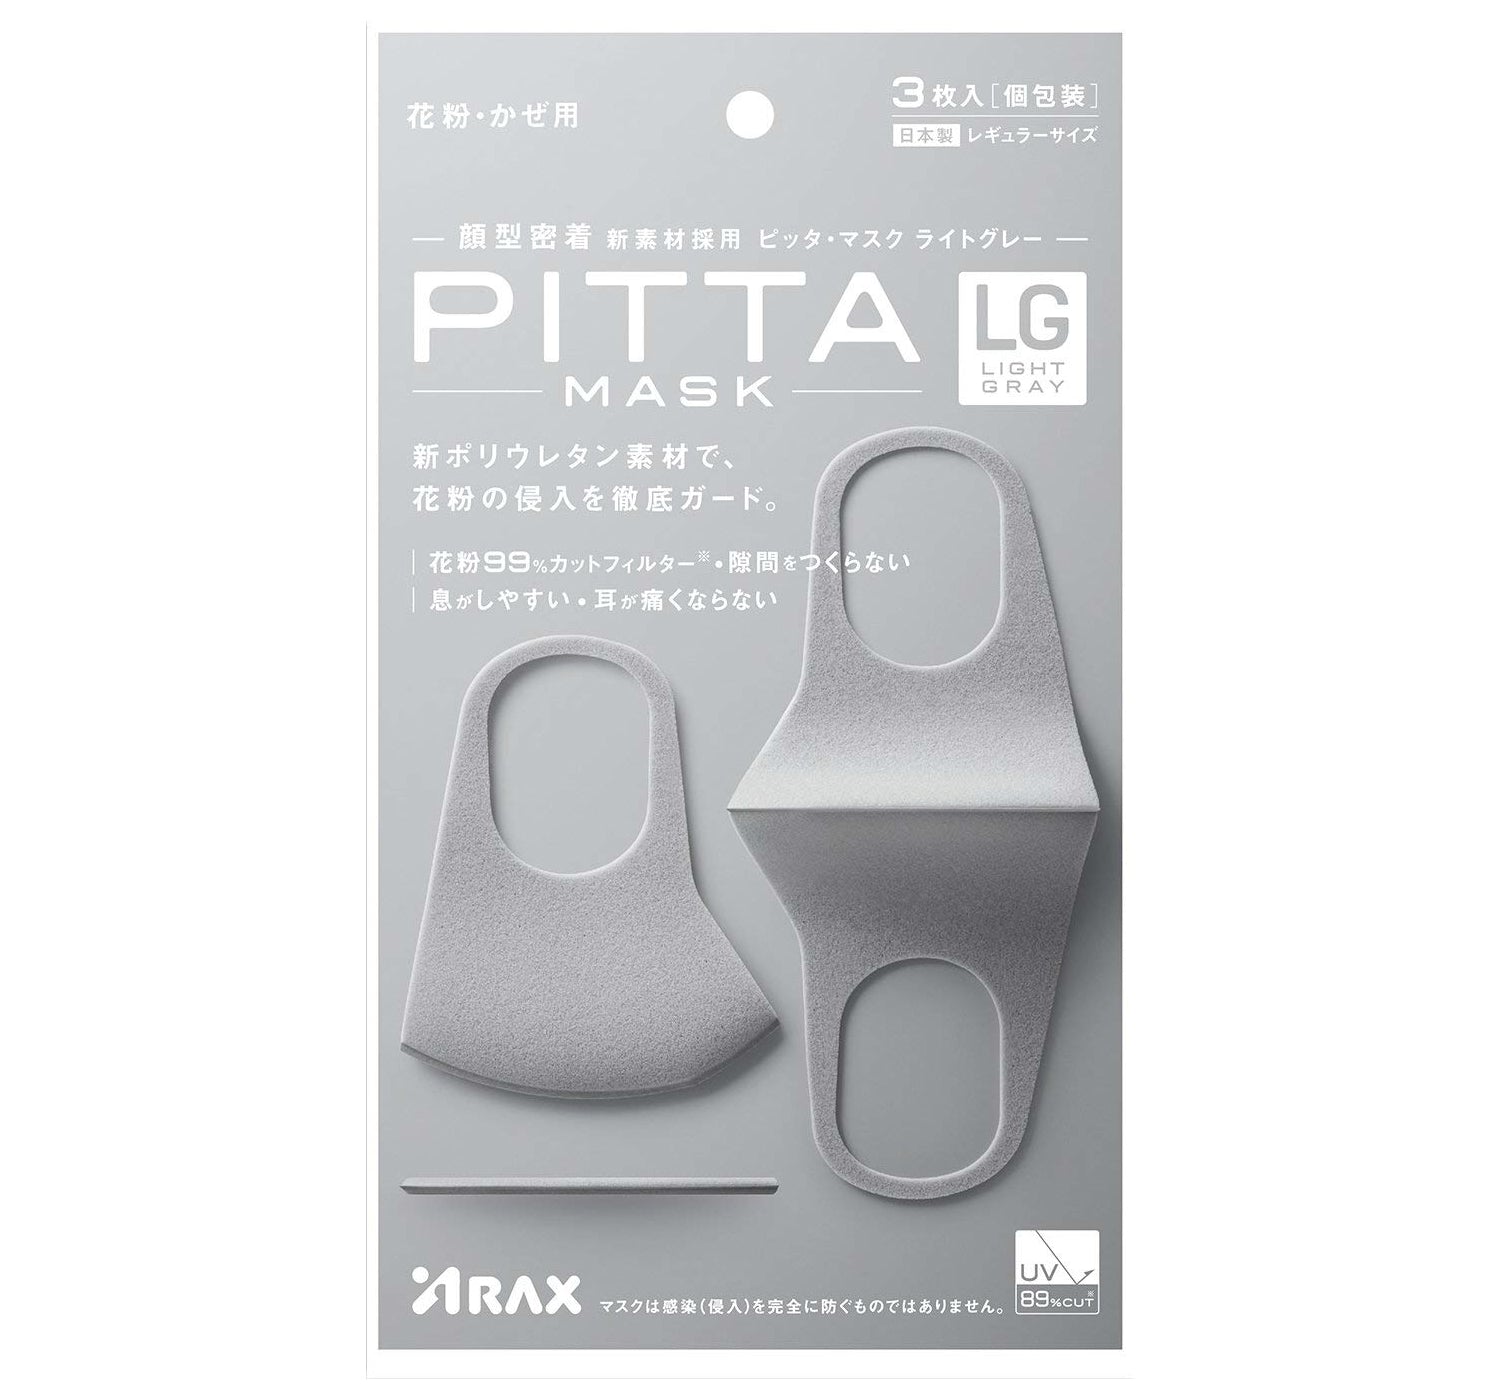 ARAX Pitta Face Mask Lifestyle Arax Light Gray  